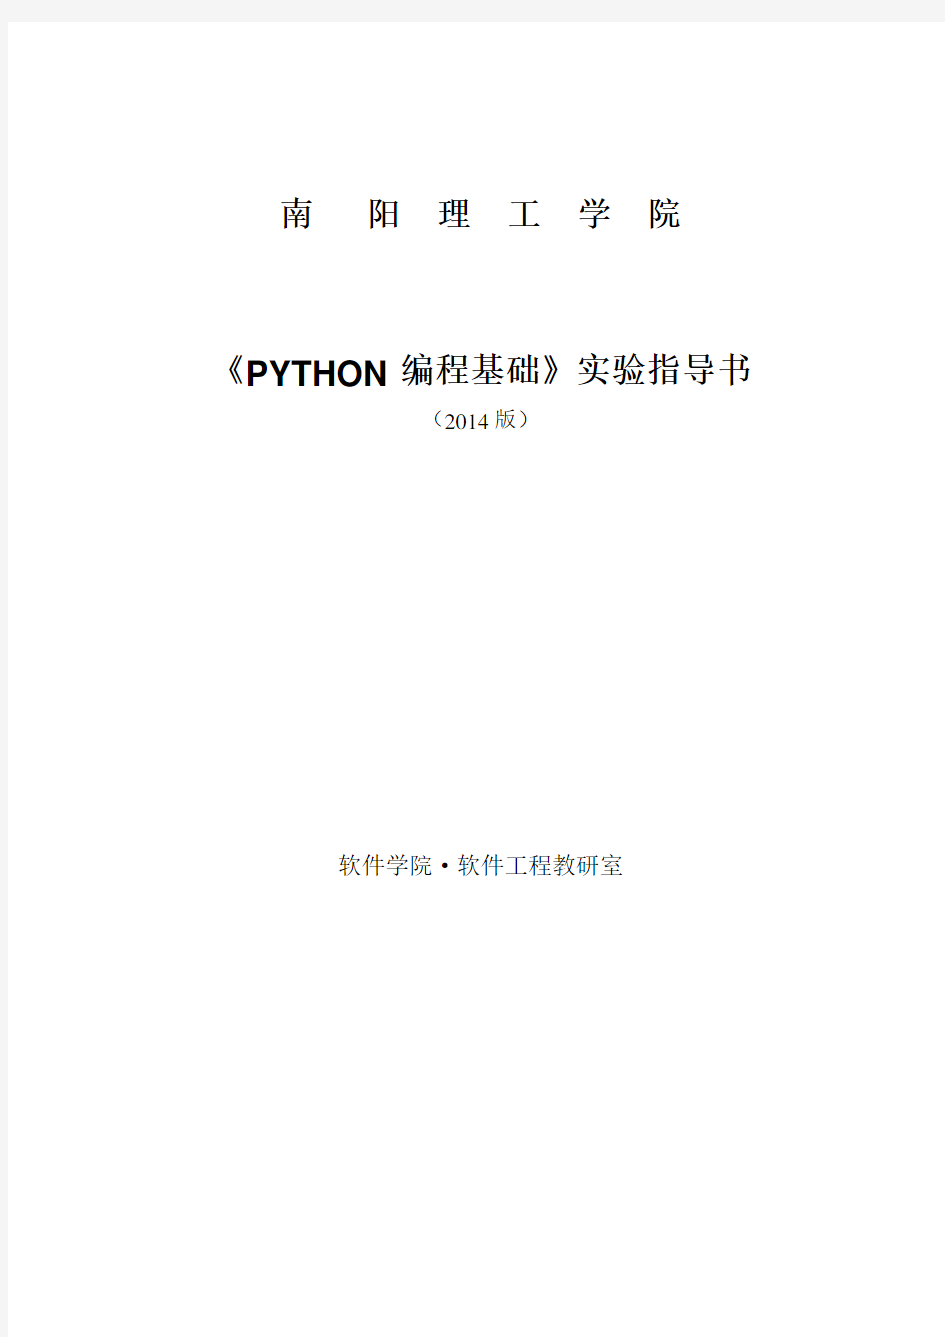 python编程基础实验指导书